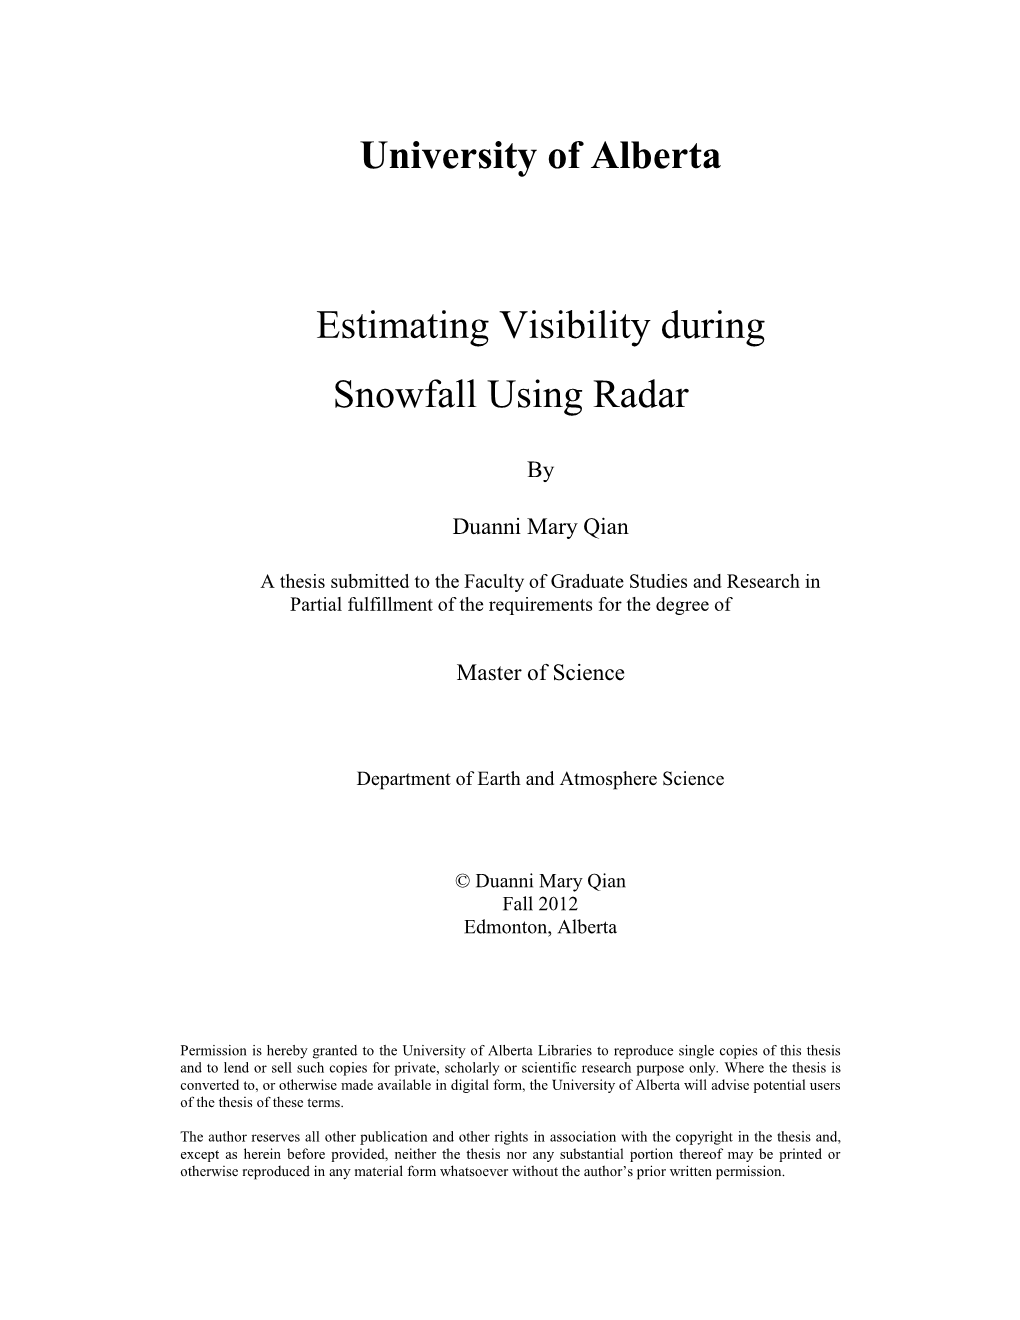 University of Alberta Estimating Visibility During Snowfall Using Radar